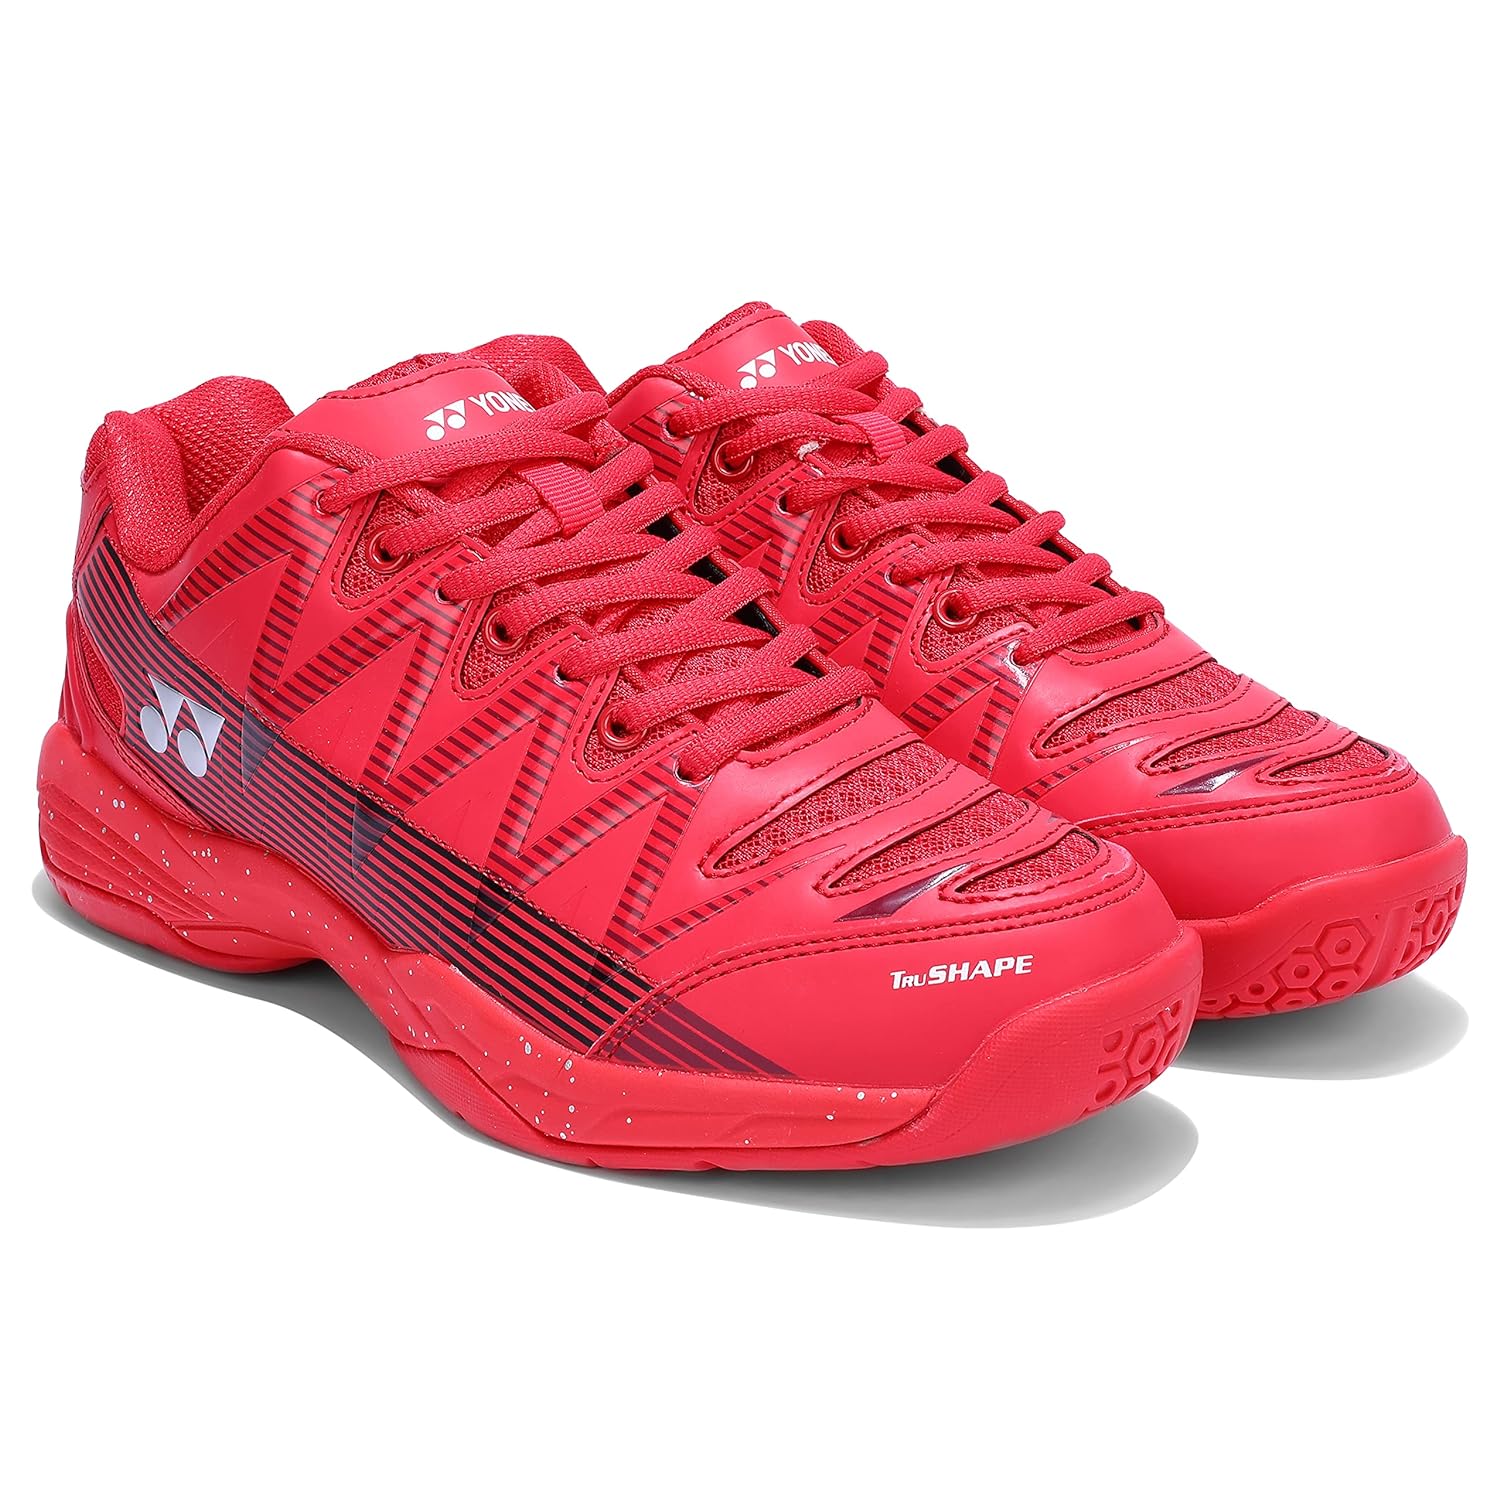 Yonex Dominant Badminton Shoes - Best Price online Prokicksports.com